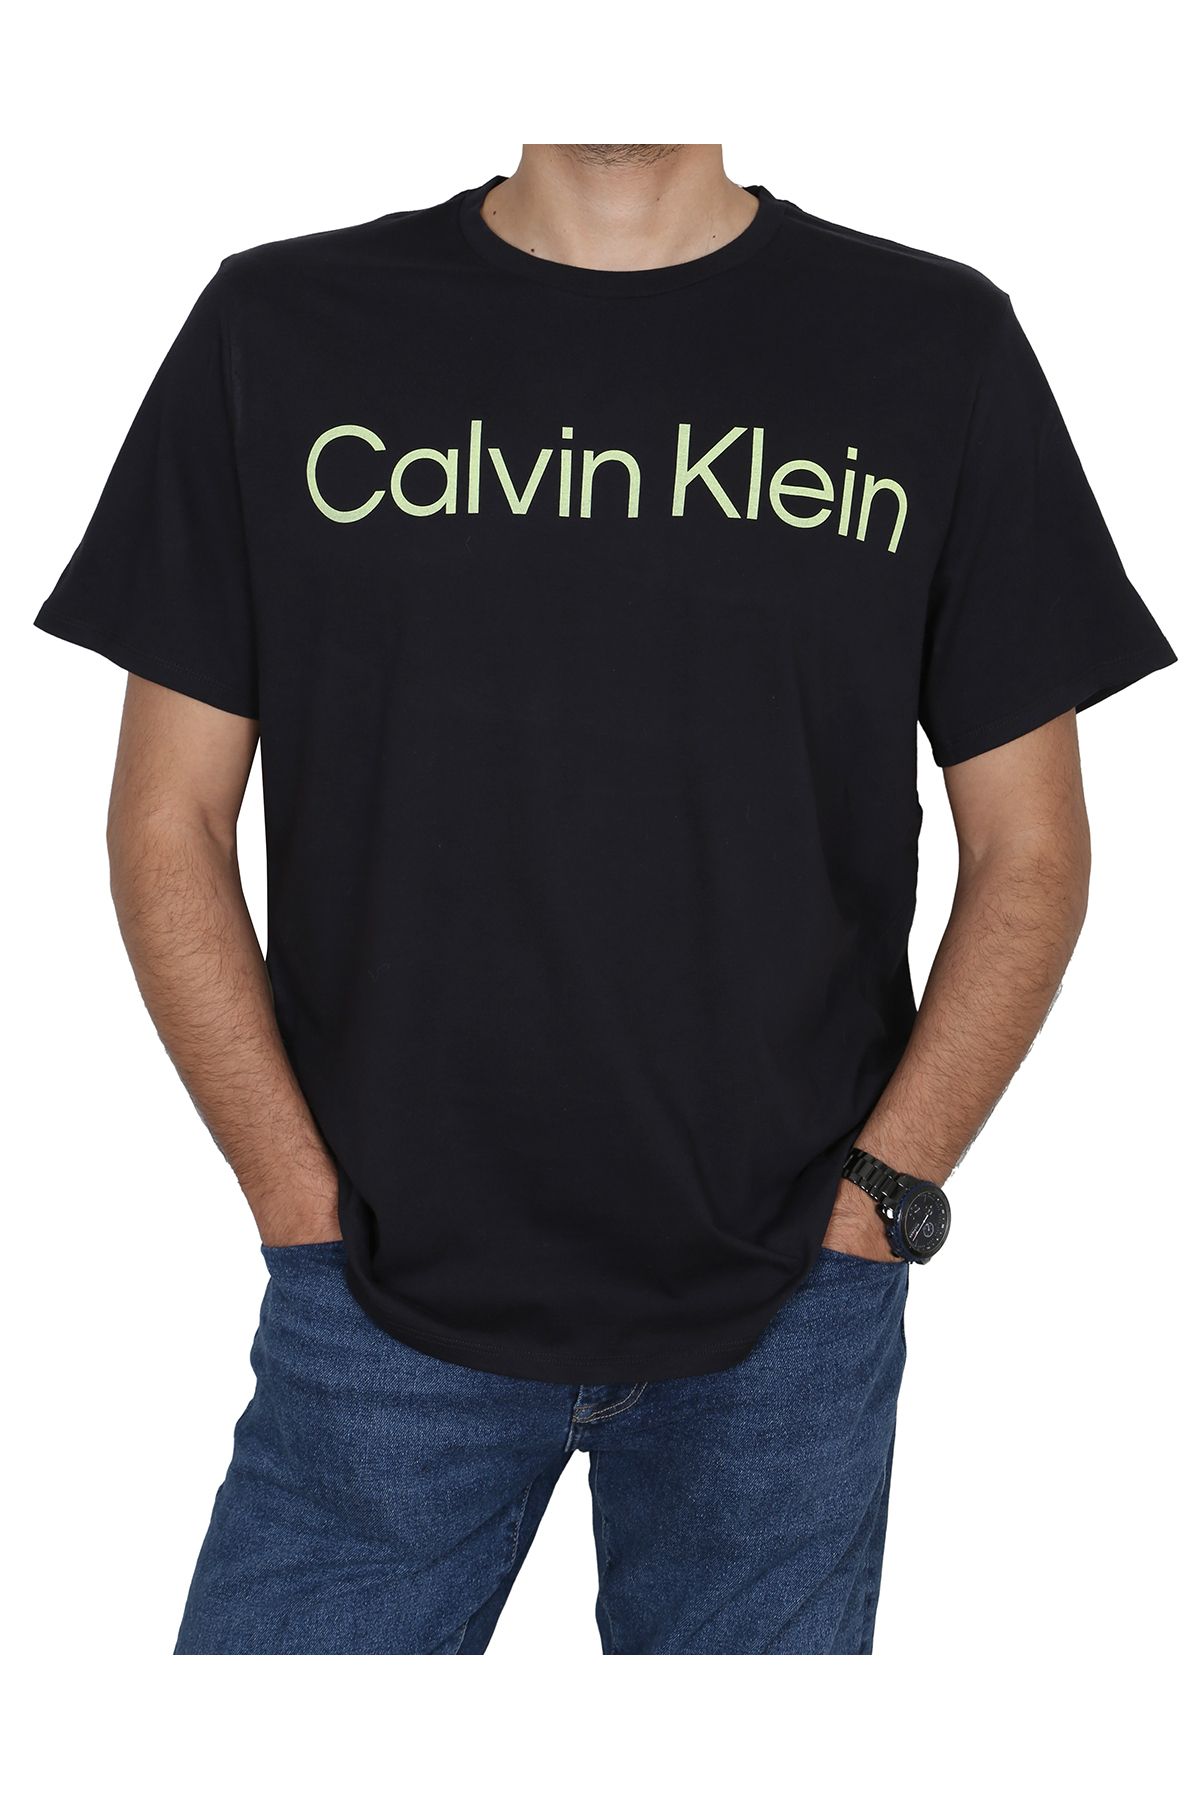 Calvin Klein Erkek T-shırt 40jm930-001